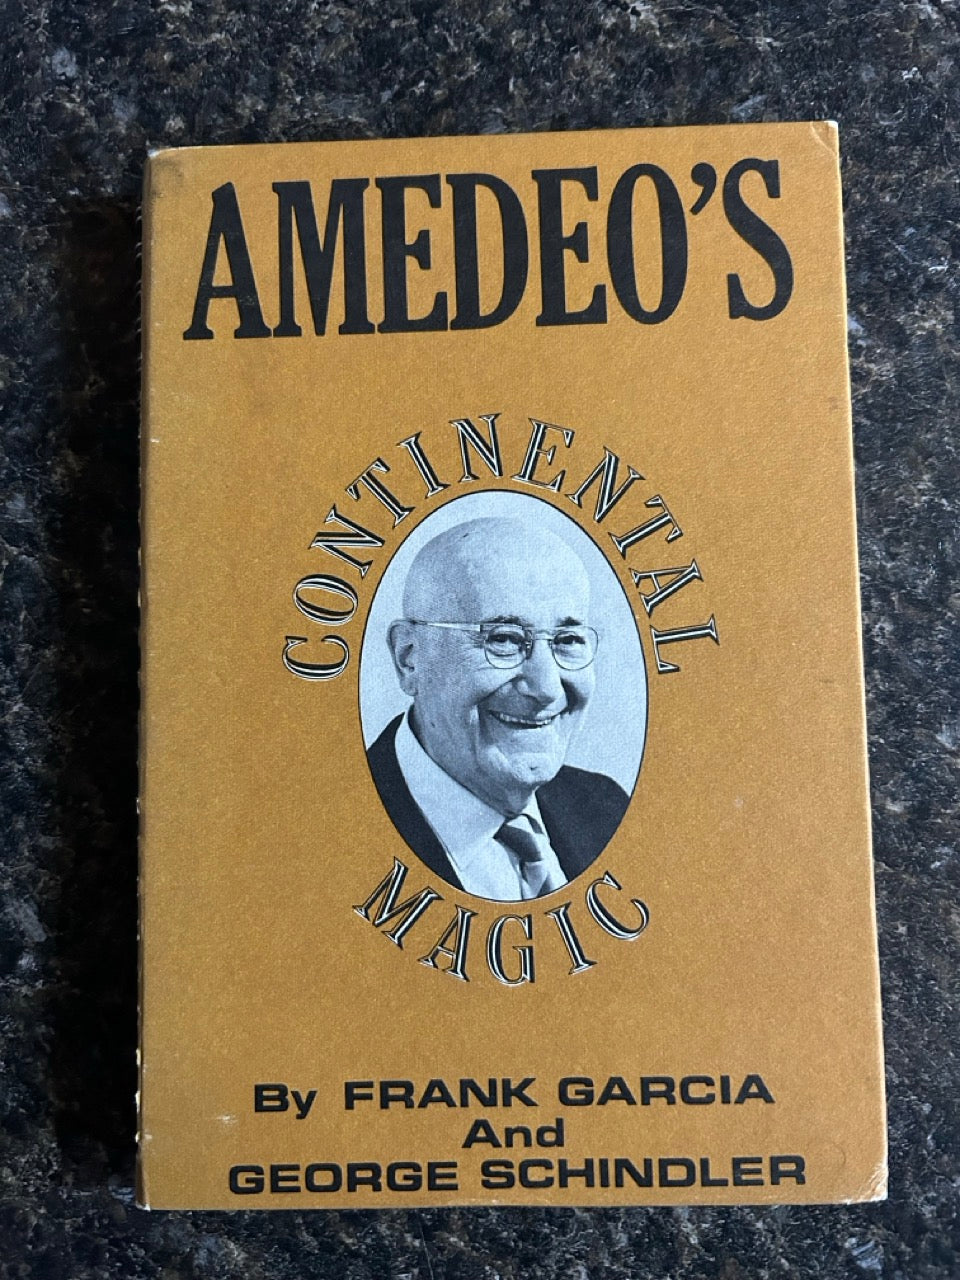 Amedeo's Continental Magic - Frank Garcia & George Schindler